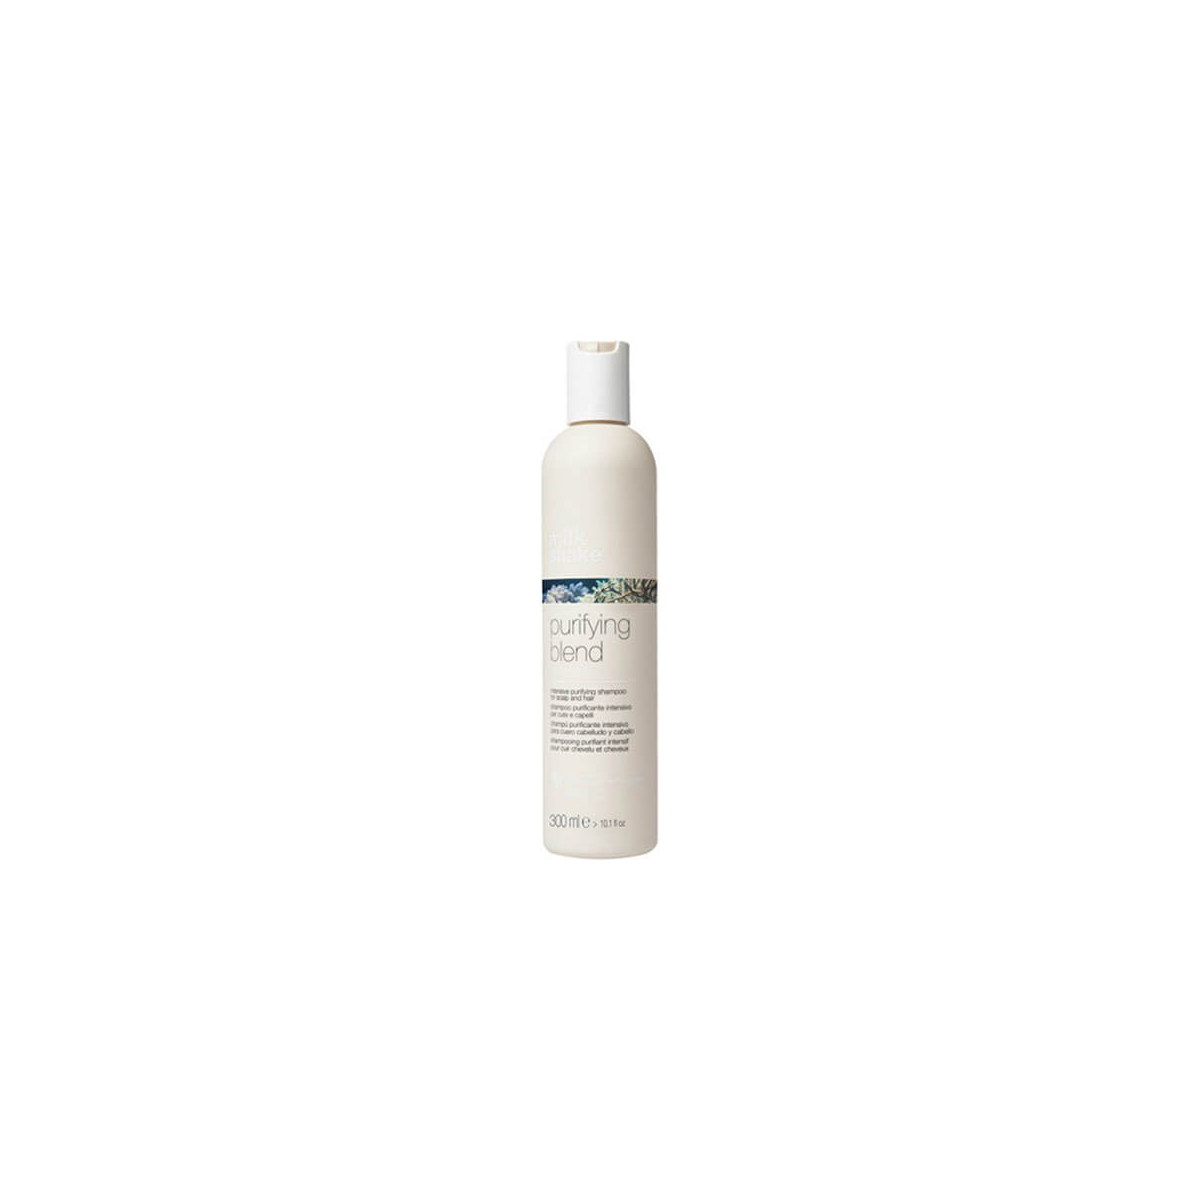 MILK SHAKE - PURIFYING BLEND SHAMPOO (300ml) Shampoo purificante